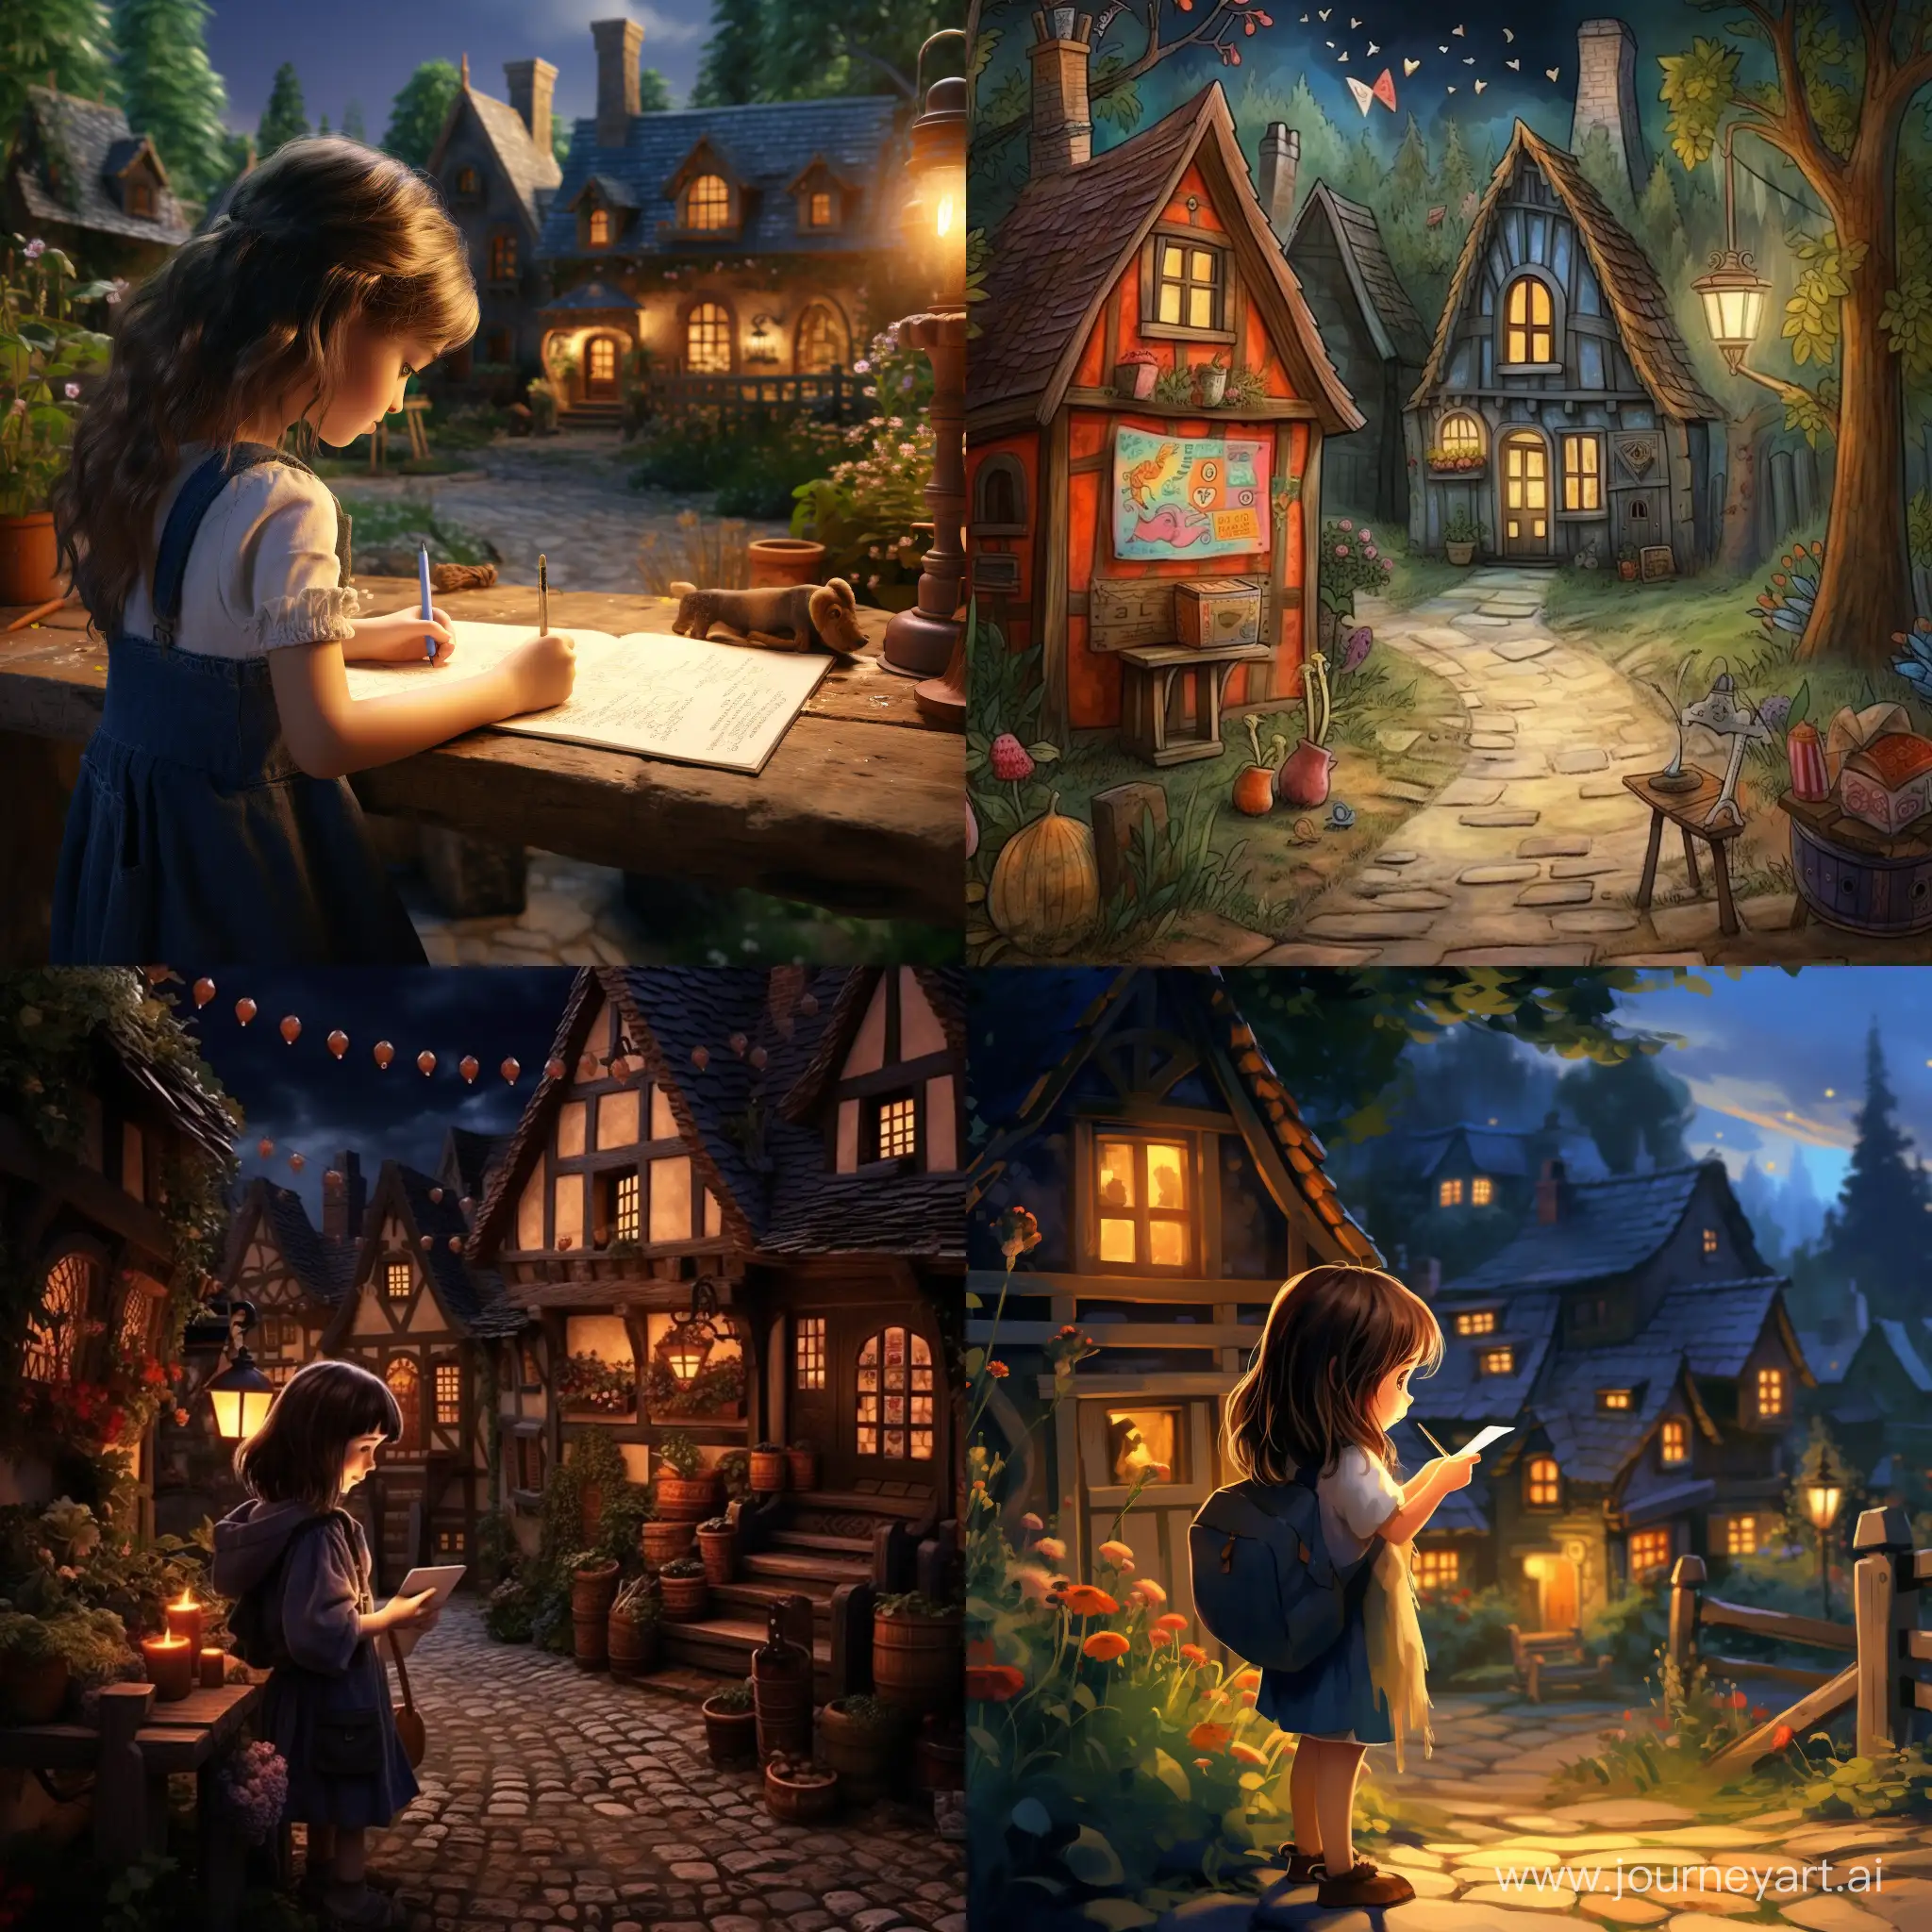 In a quaint village, Lily found a magic pen.